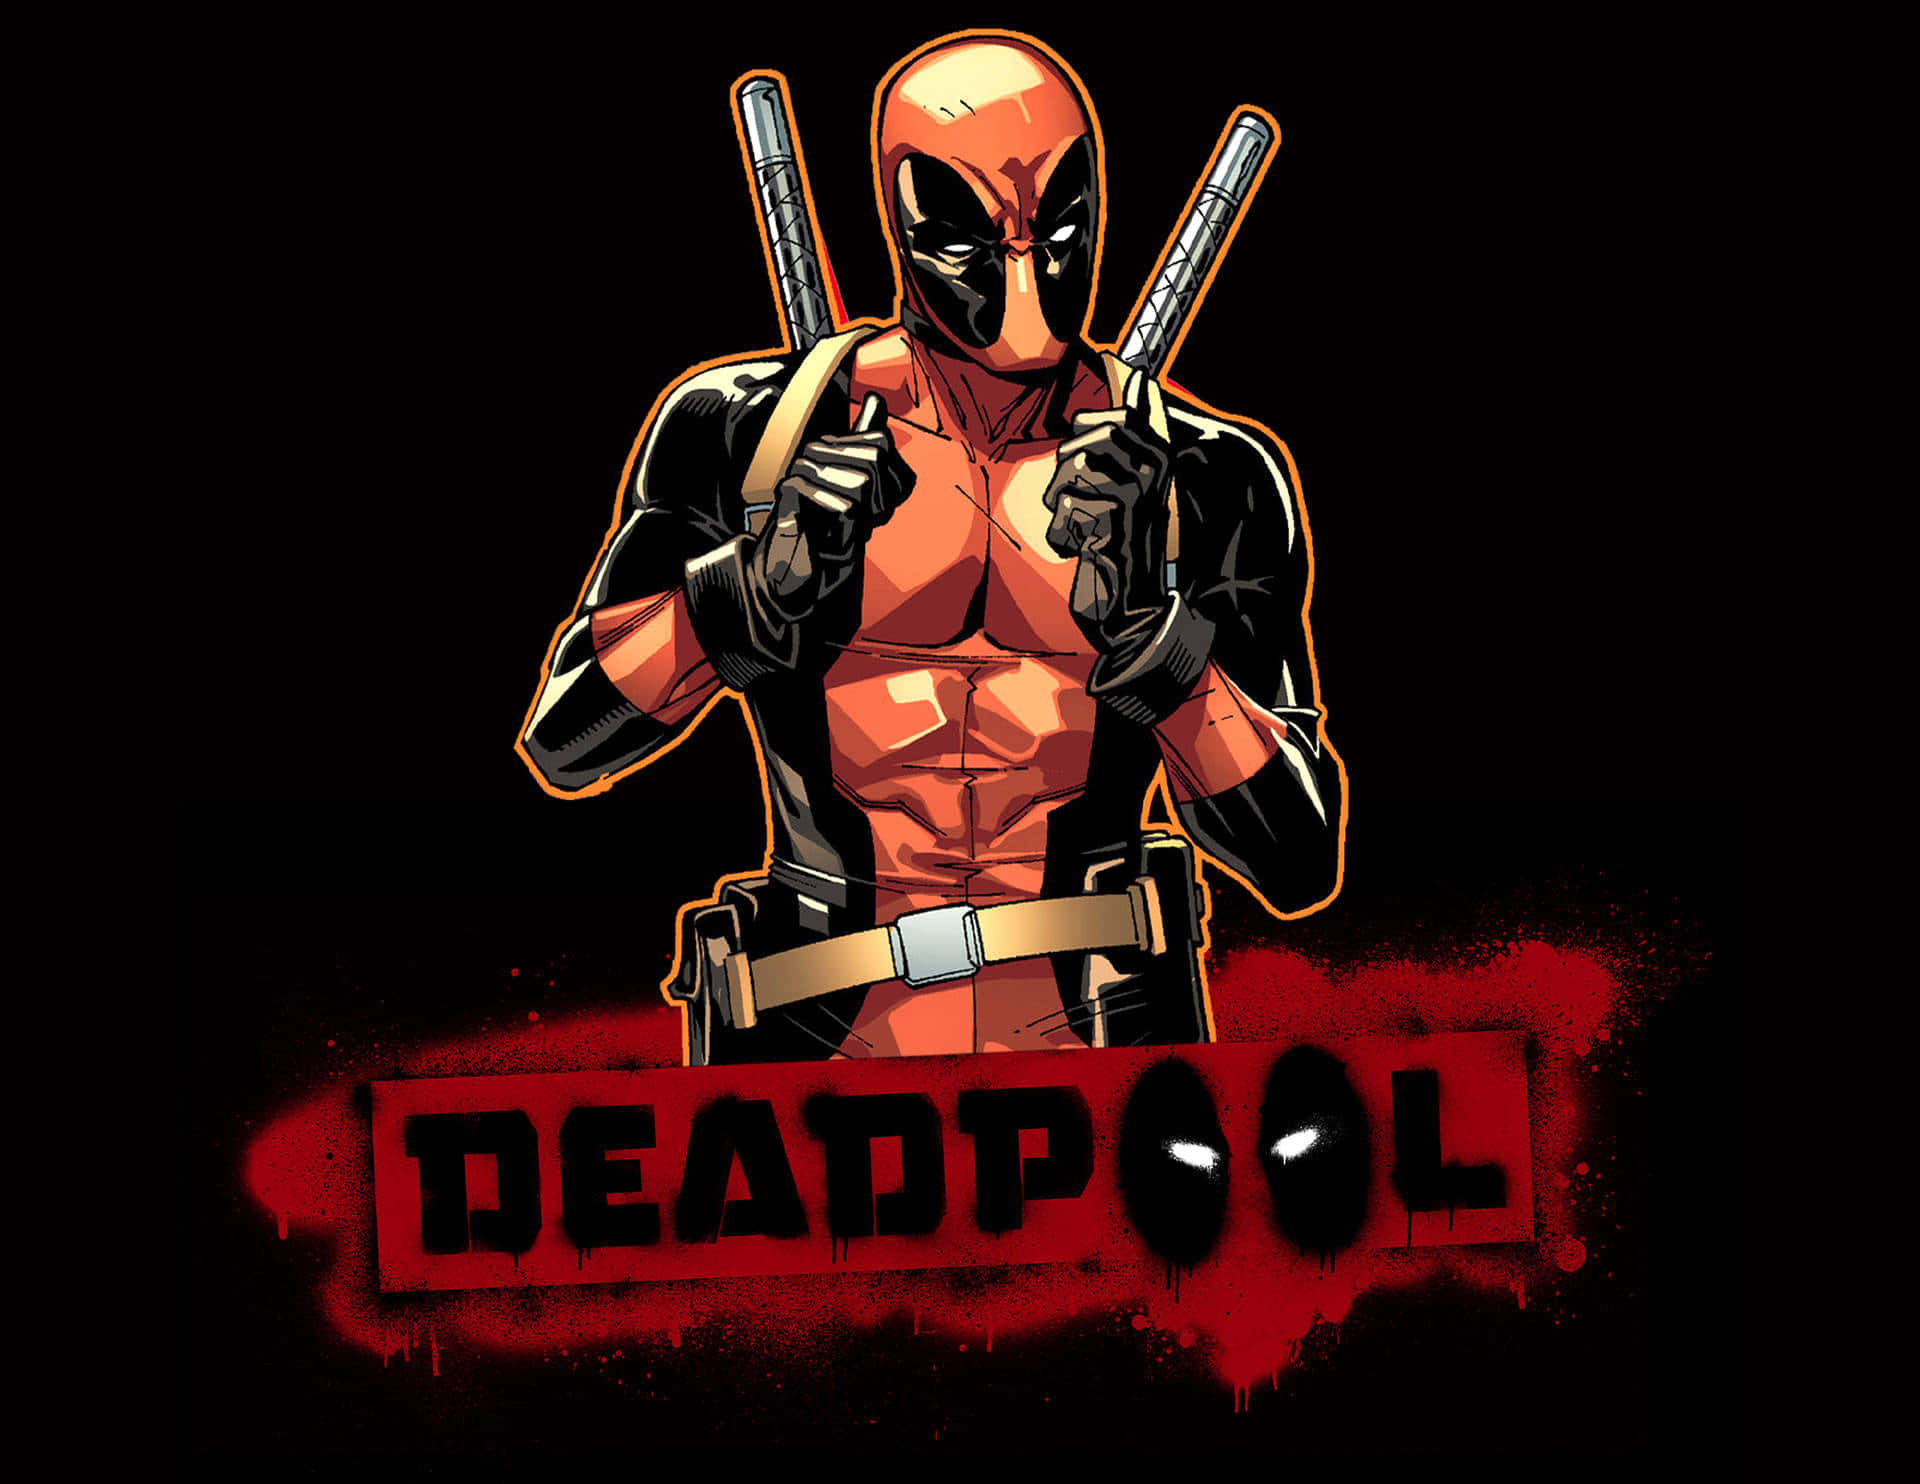 Comicbuch Deadpool Logo Wallpaper